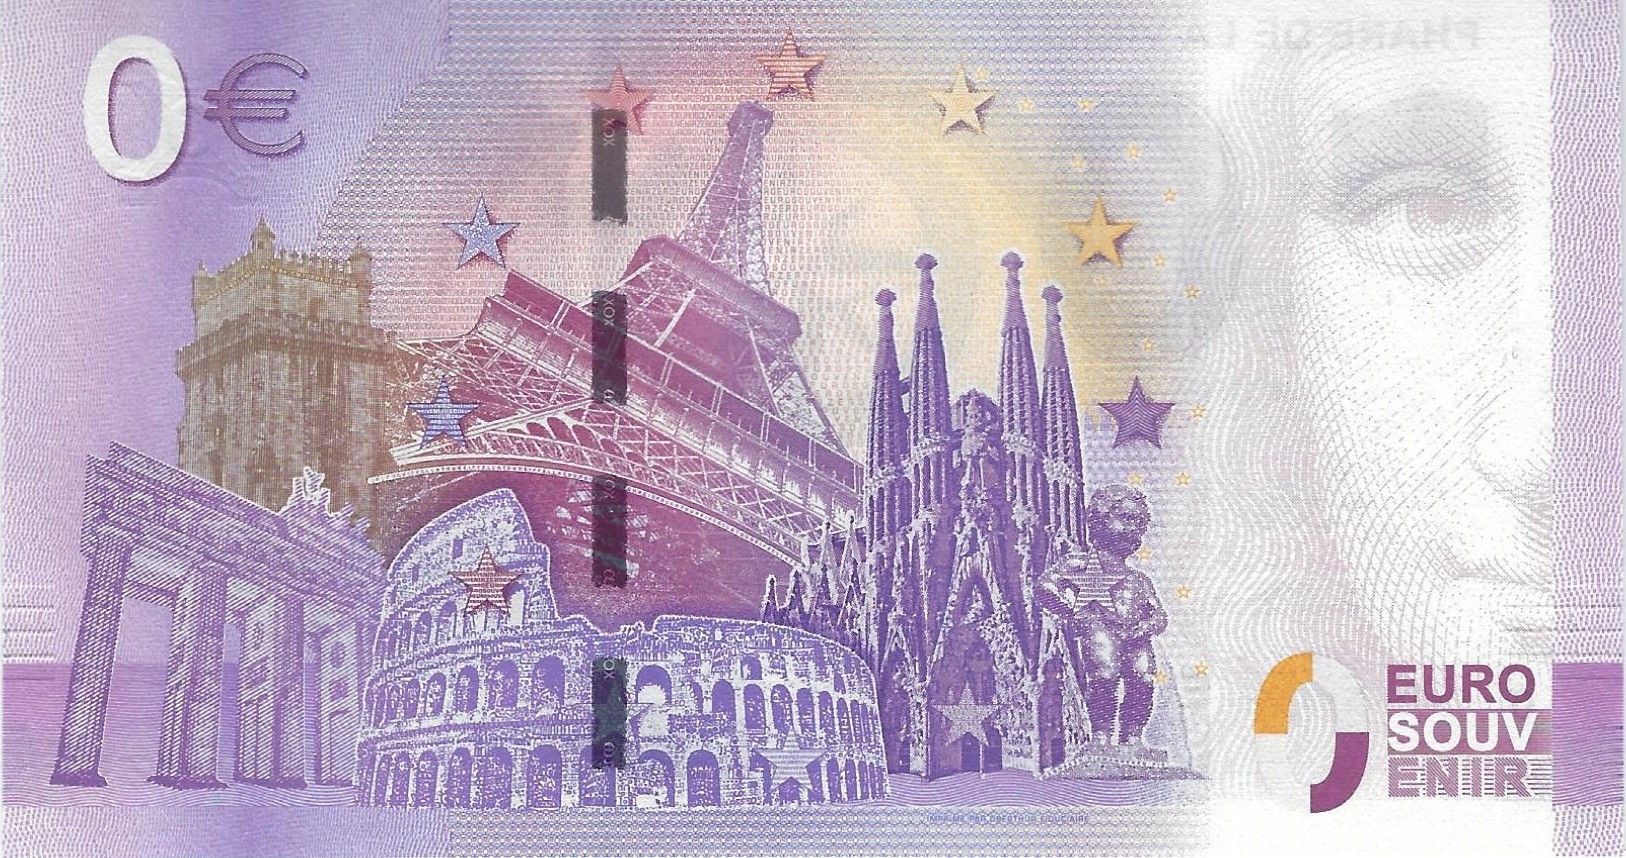 NumiSport€uro Italie 2018 Michelangelos David 0 Euro Souvenir Billet Touristique 